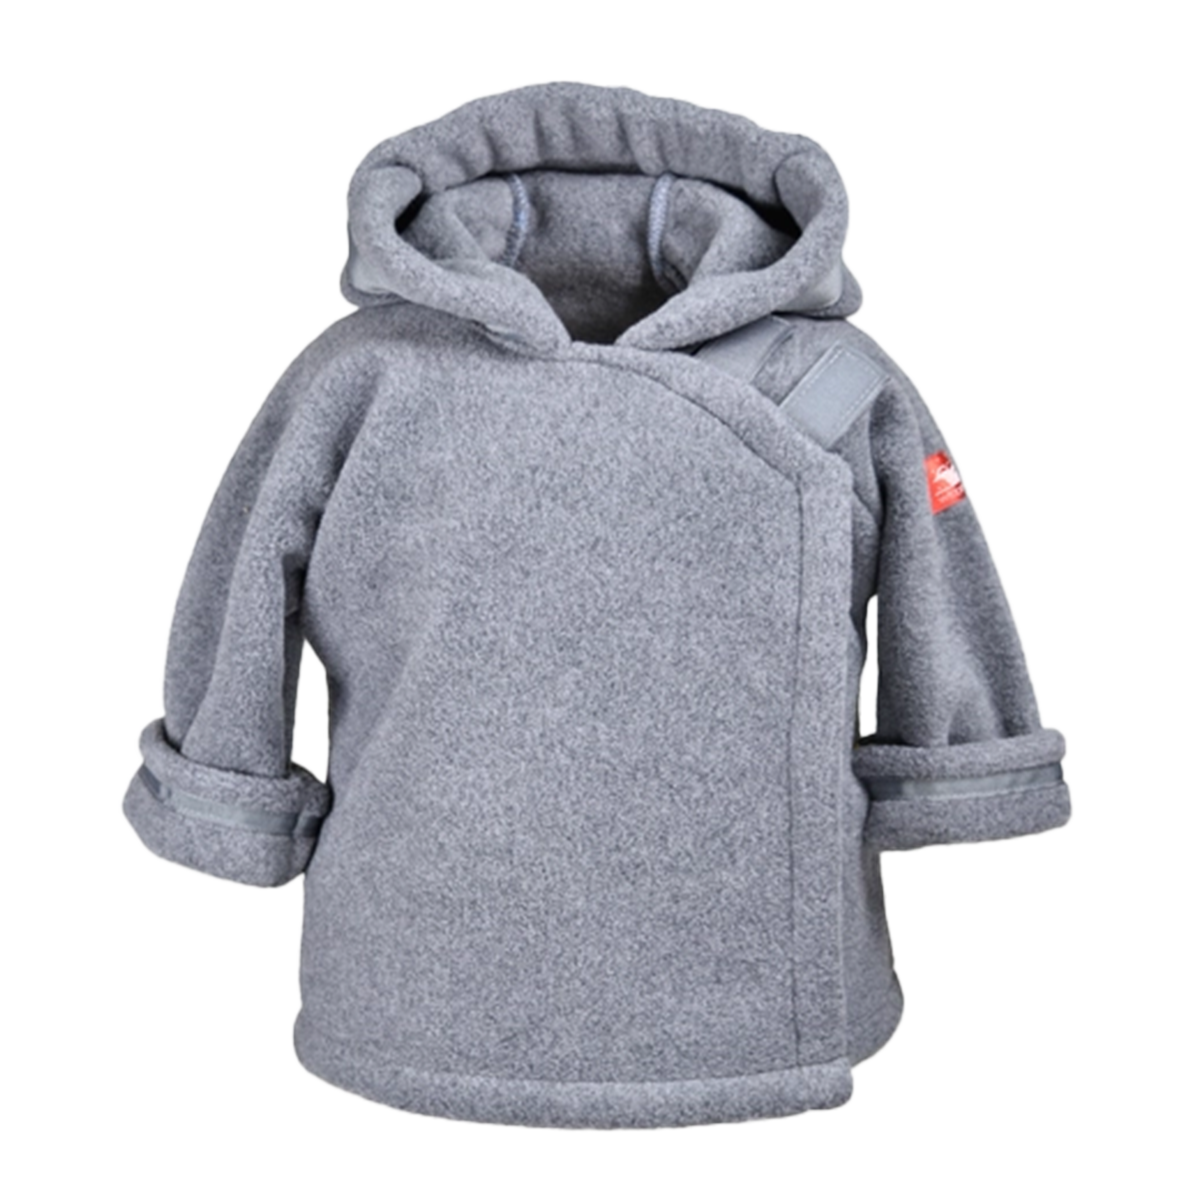 Baby Boy Grey Fleece Toddler Jacket by Widgeon